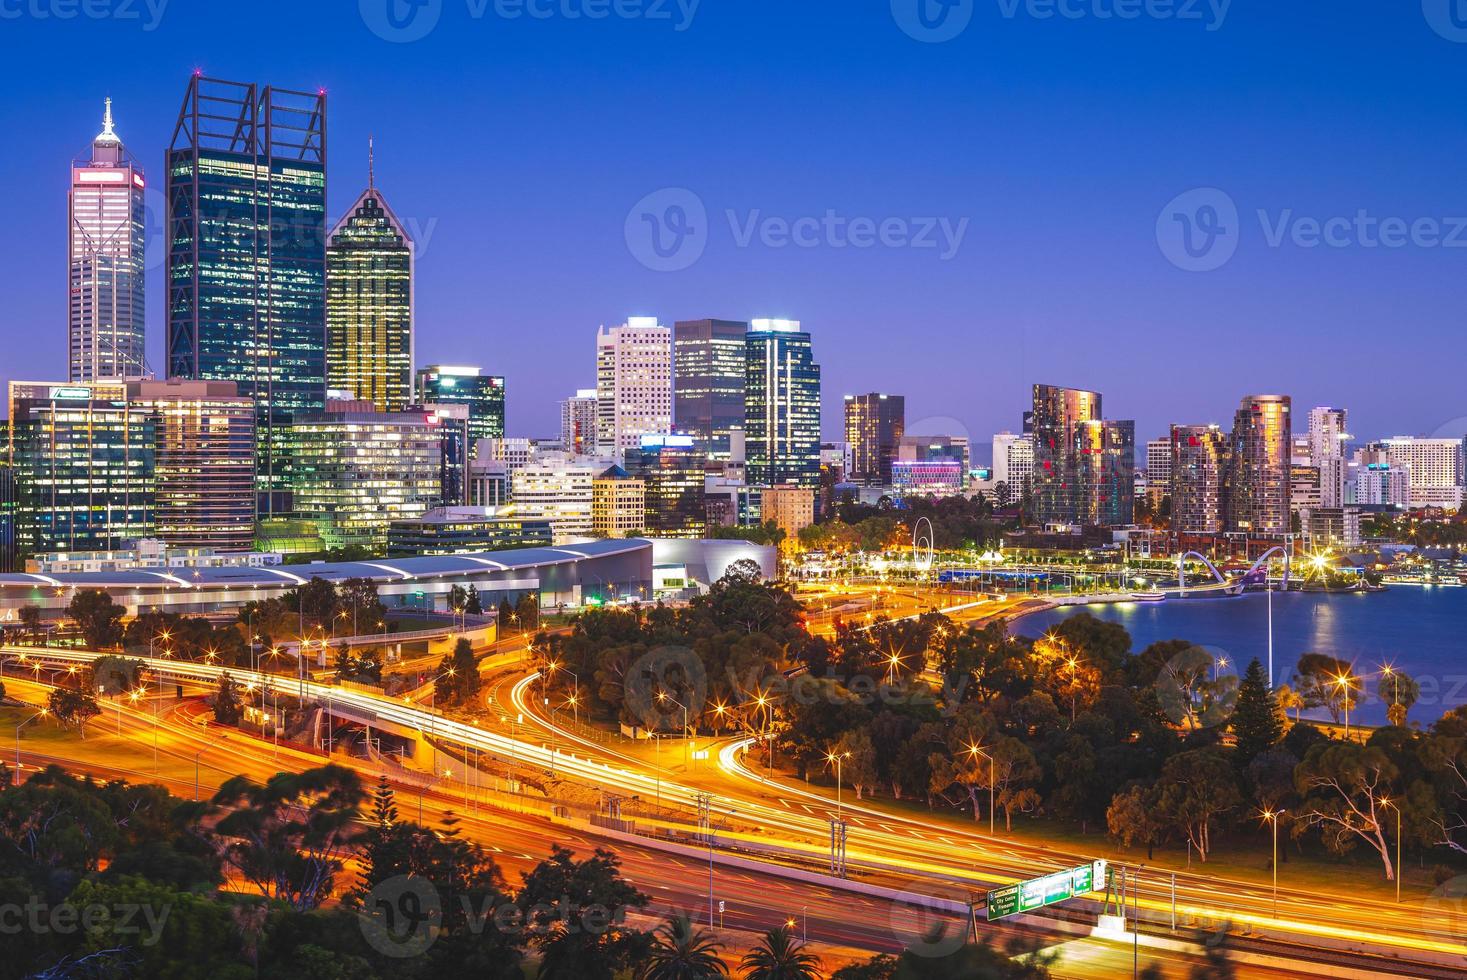 horisont av Perth på natten i västra Australien foto